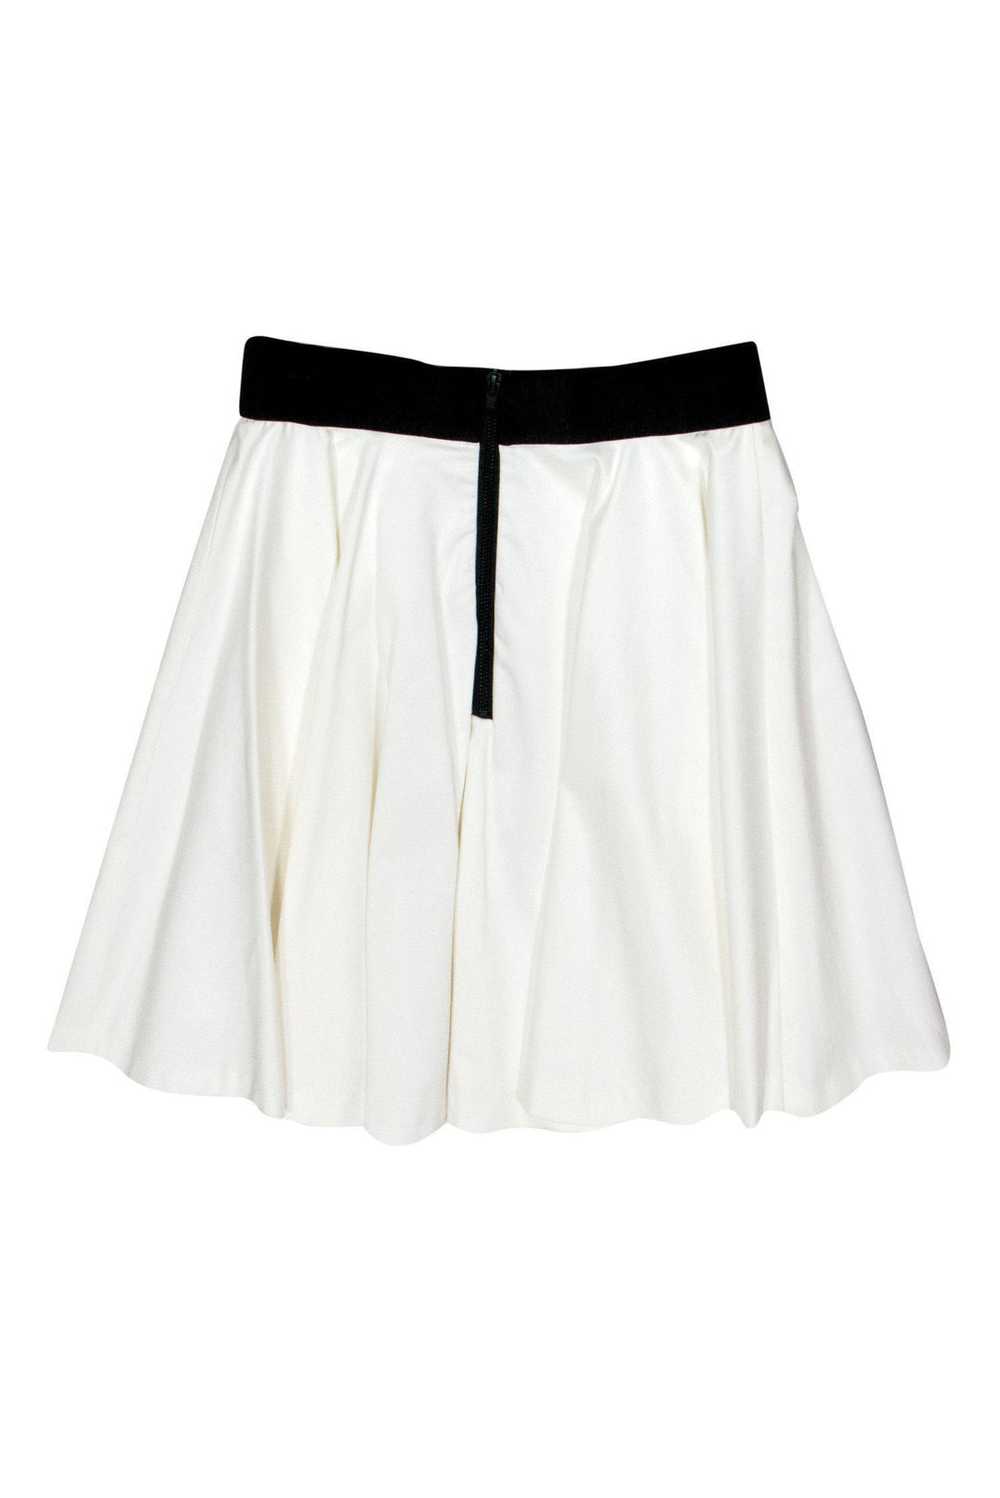 Milly - White Flare Skirt w/ Black Waistband Sz 4 - image 4